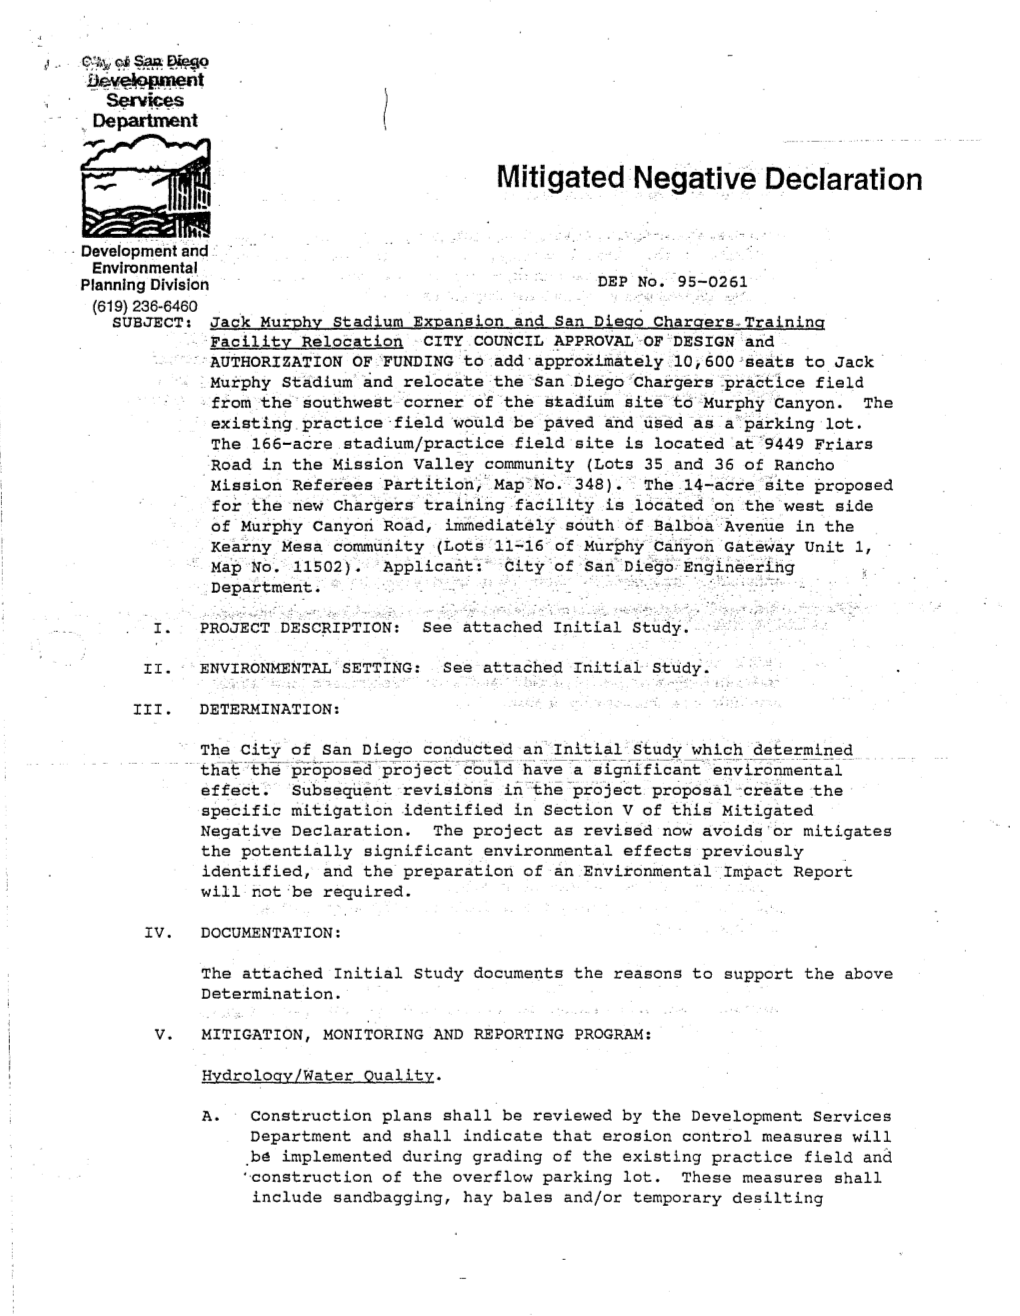 Mitigated Negc1tiye Declaration